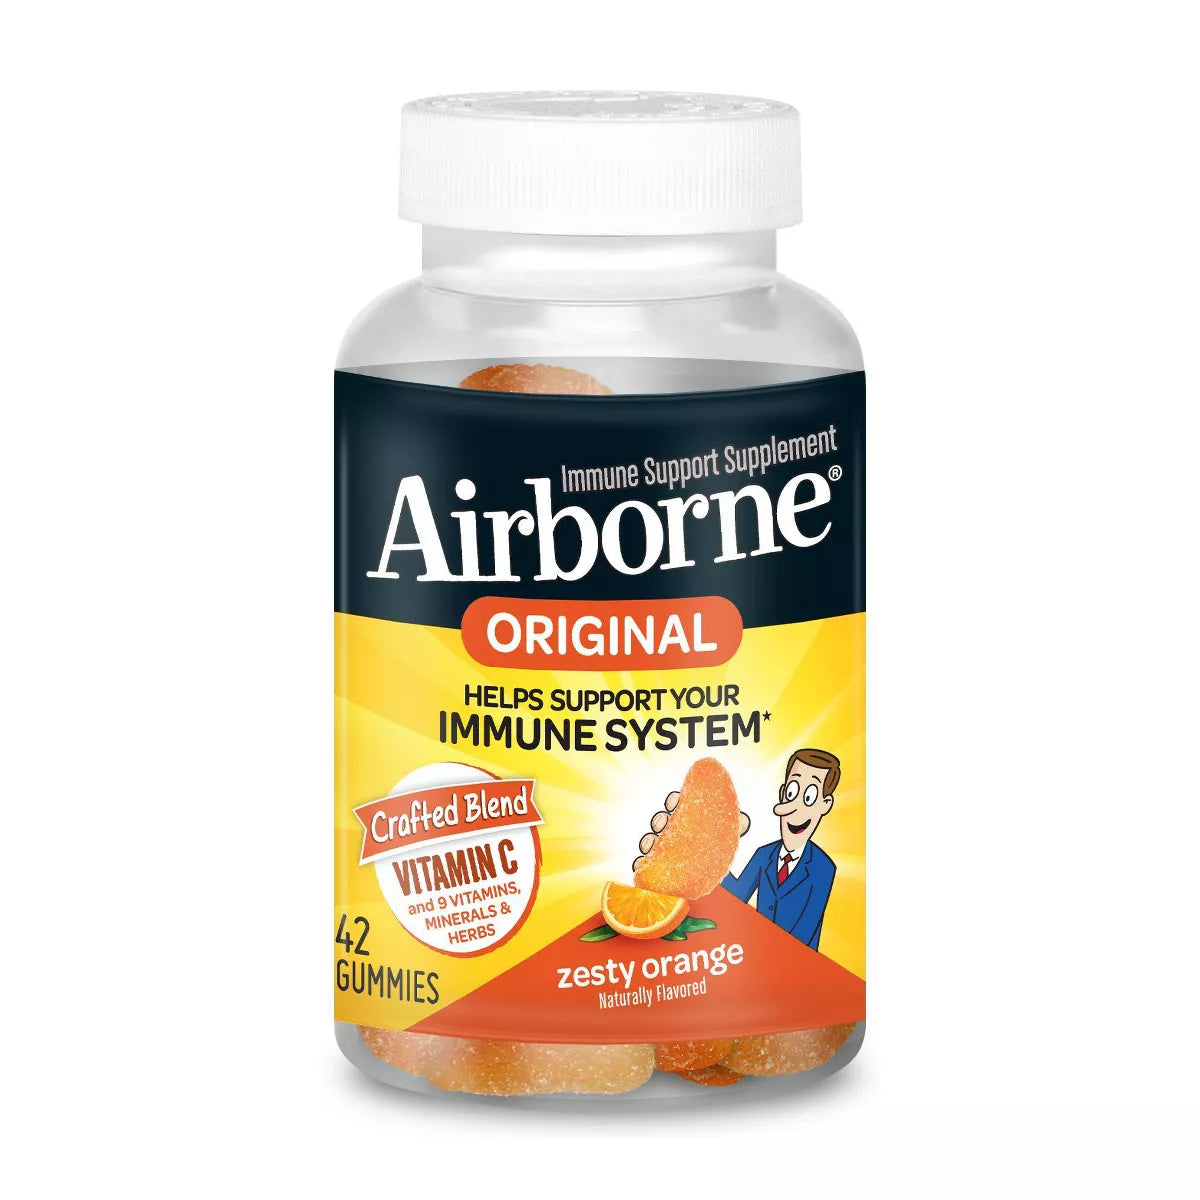 Airborne Vitamin C Immune Support Supplement Gummies